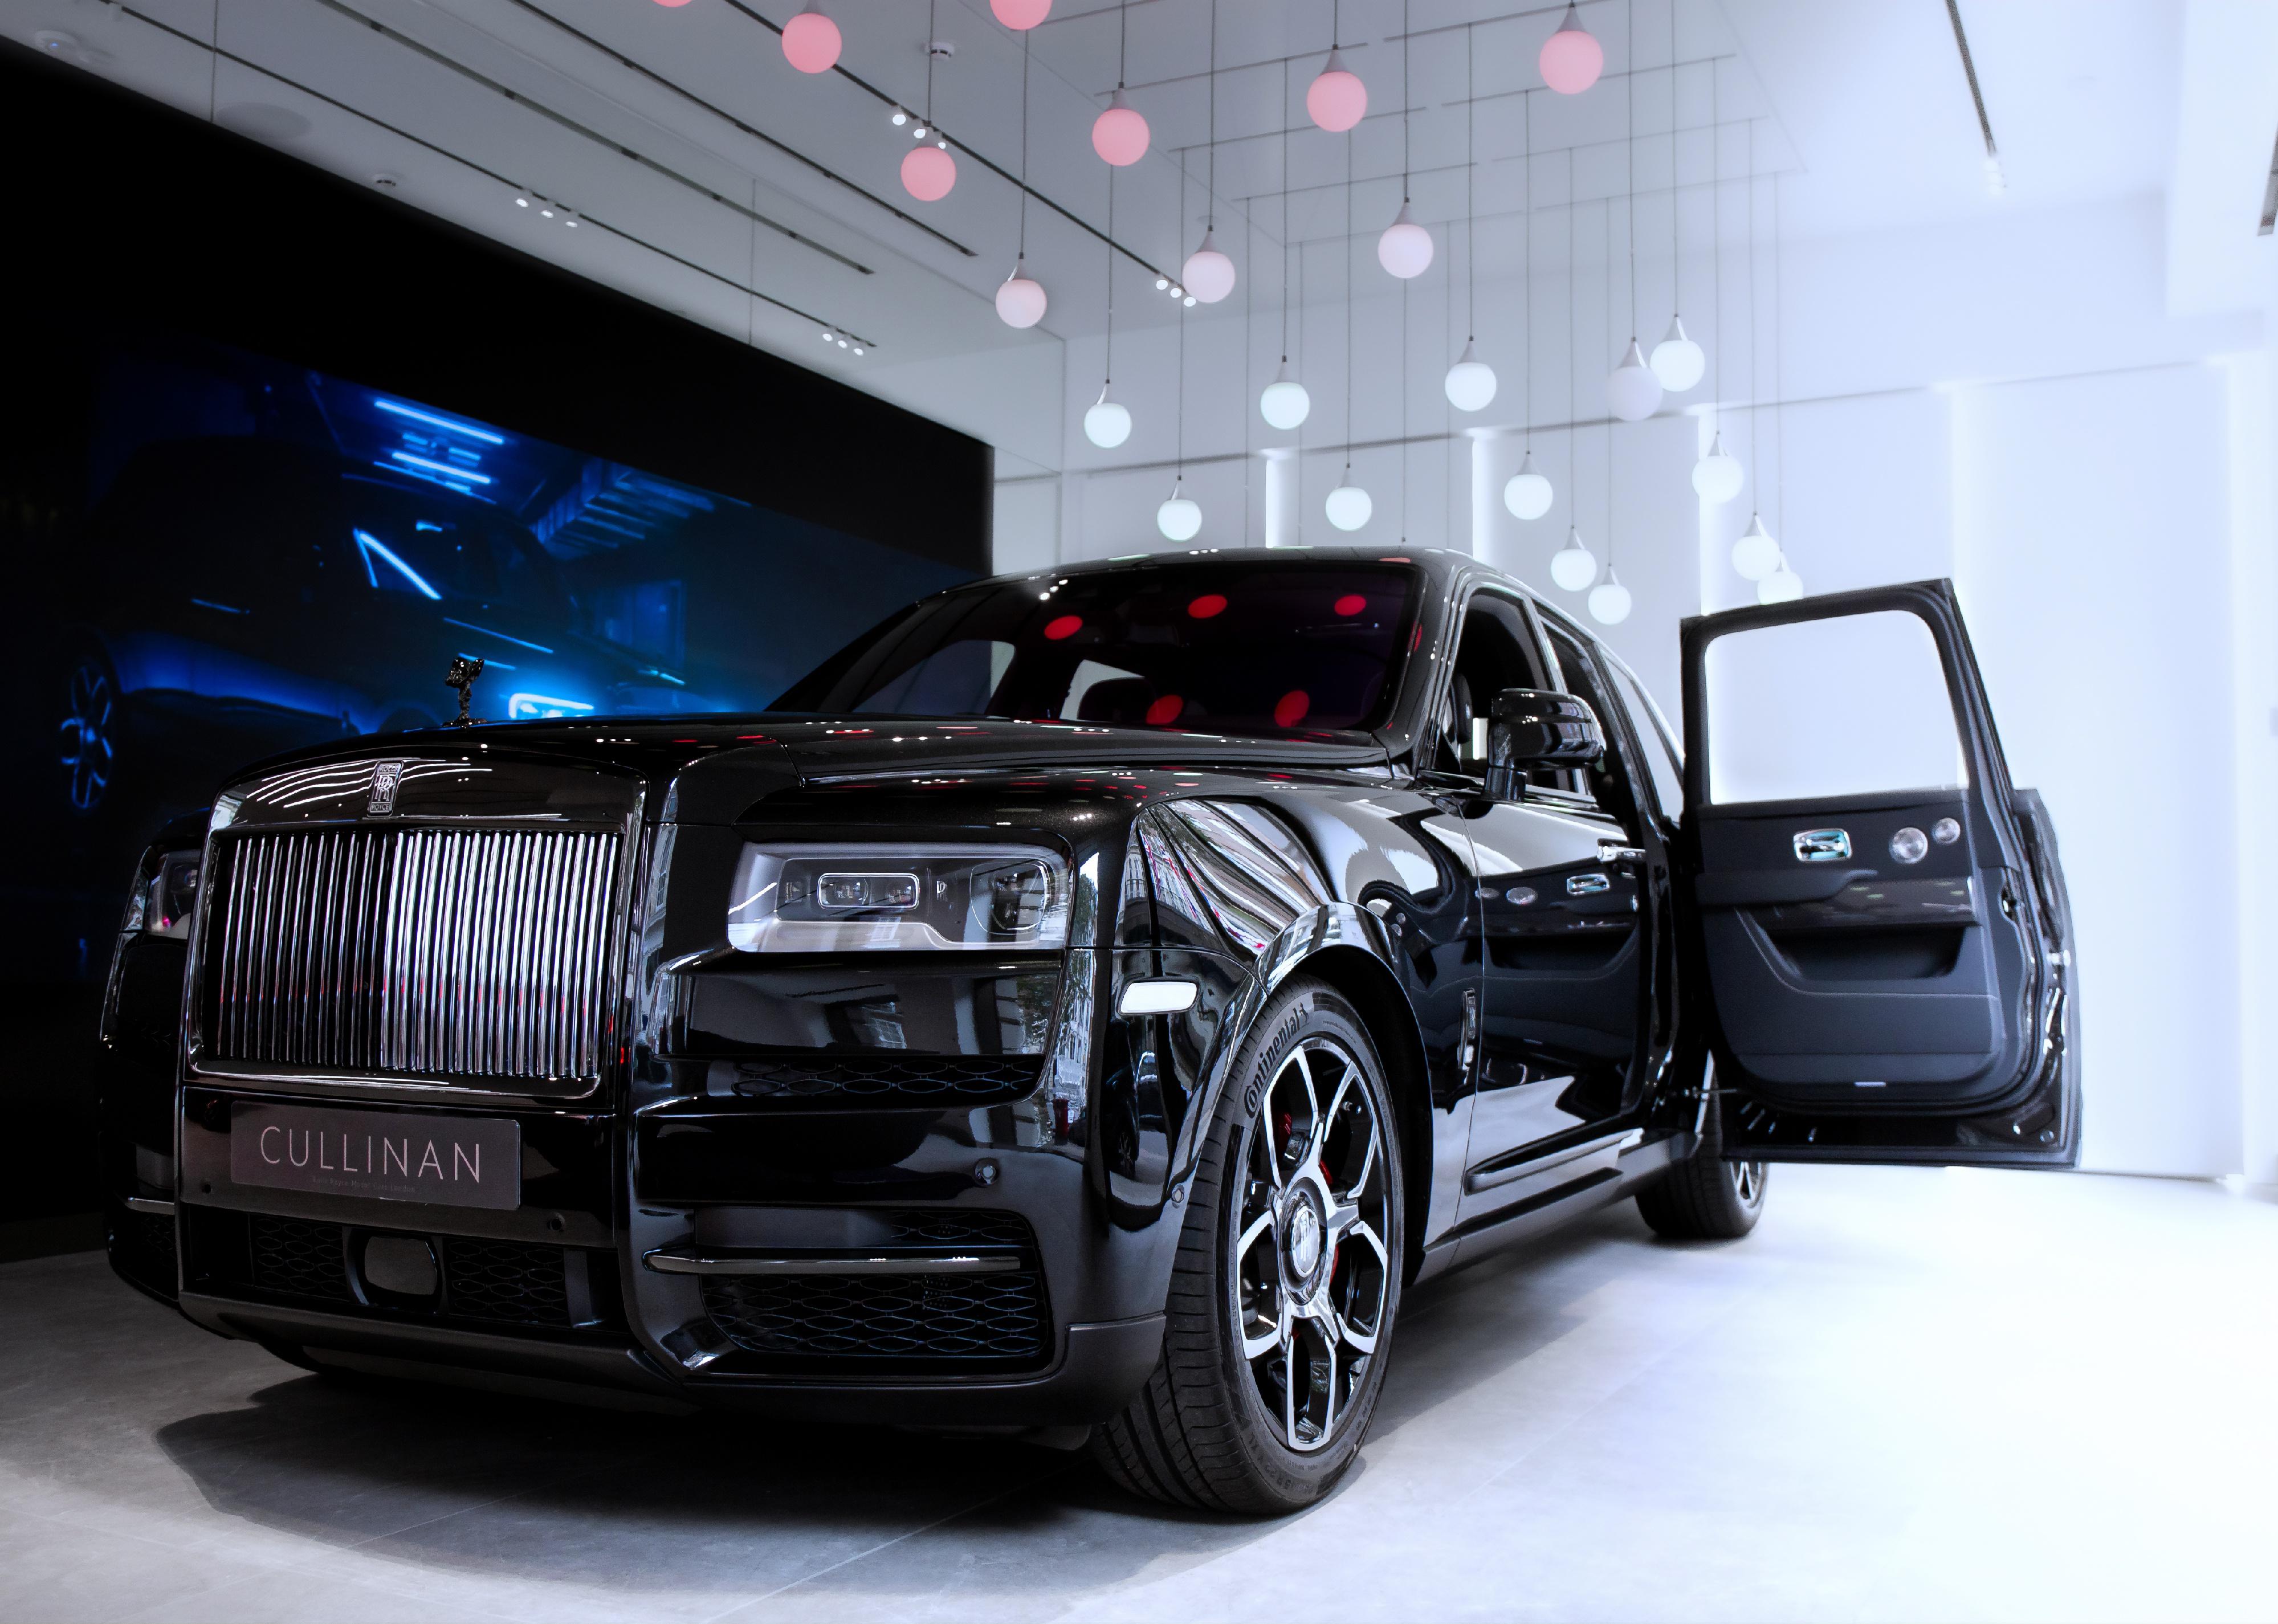 A black Rolls Royce Cullinan on a showroom floor.